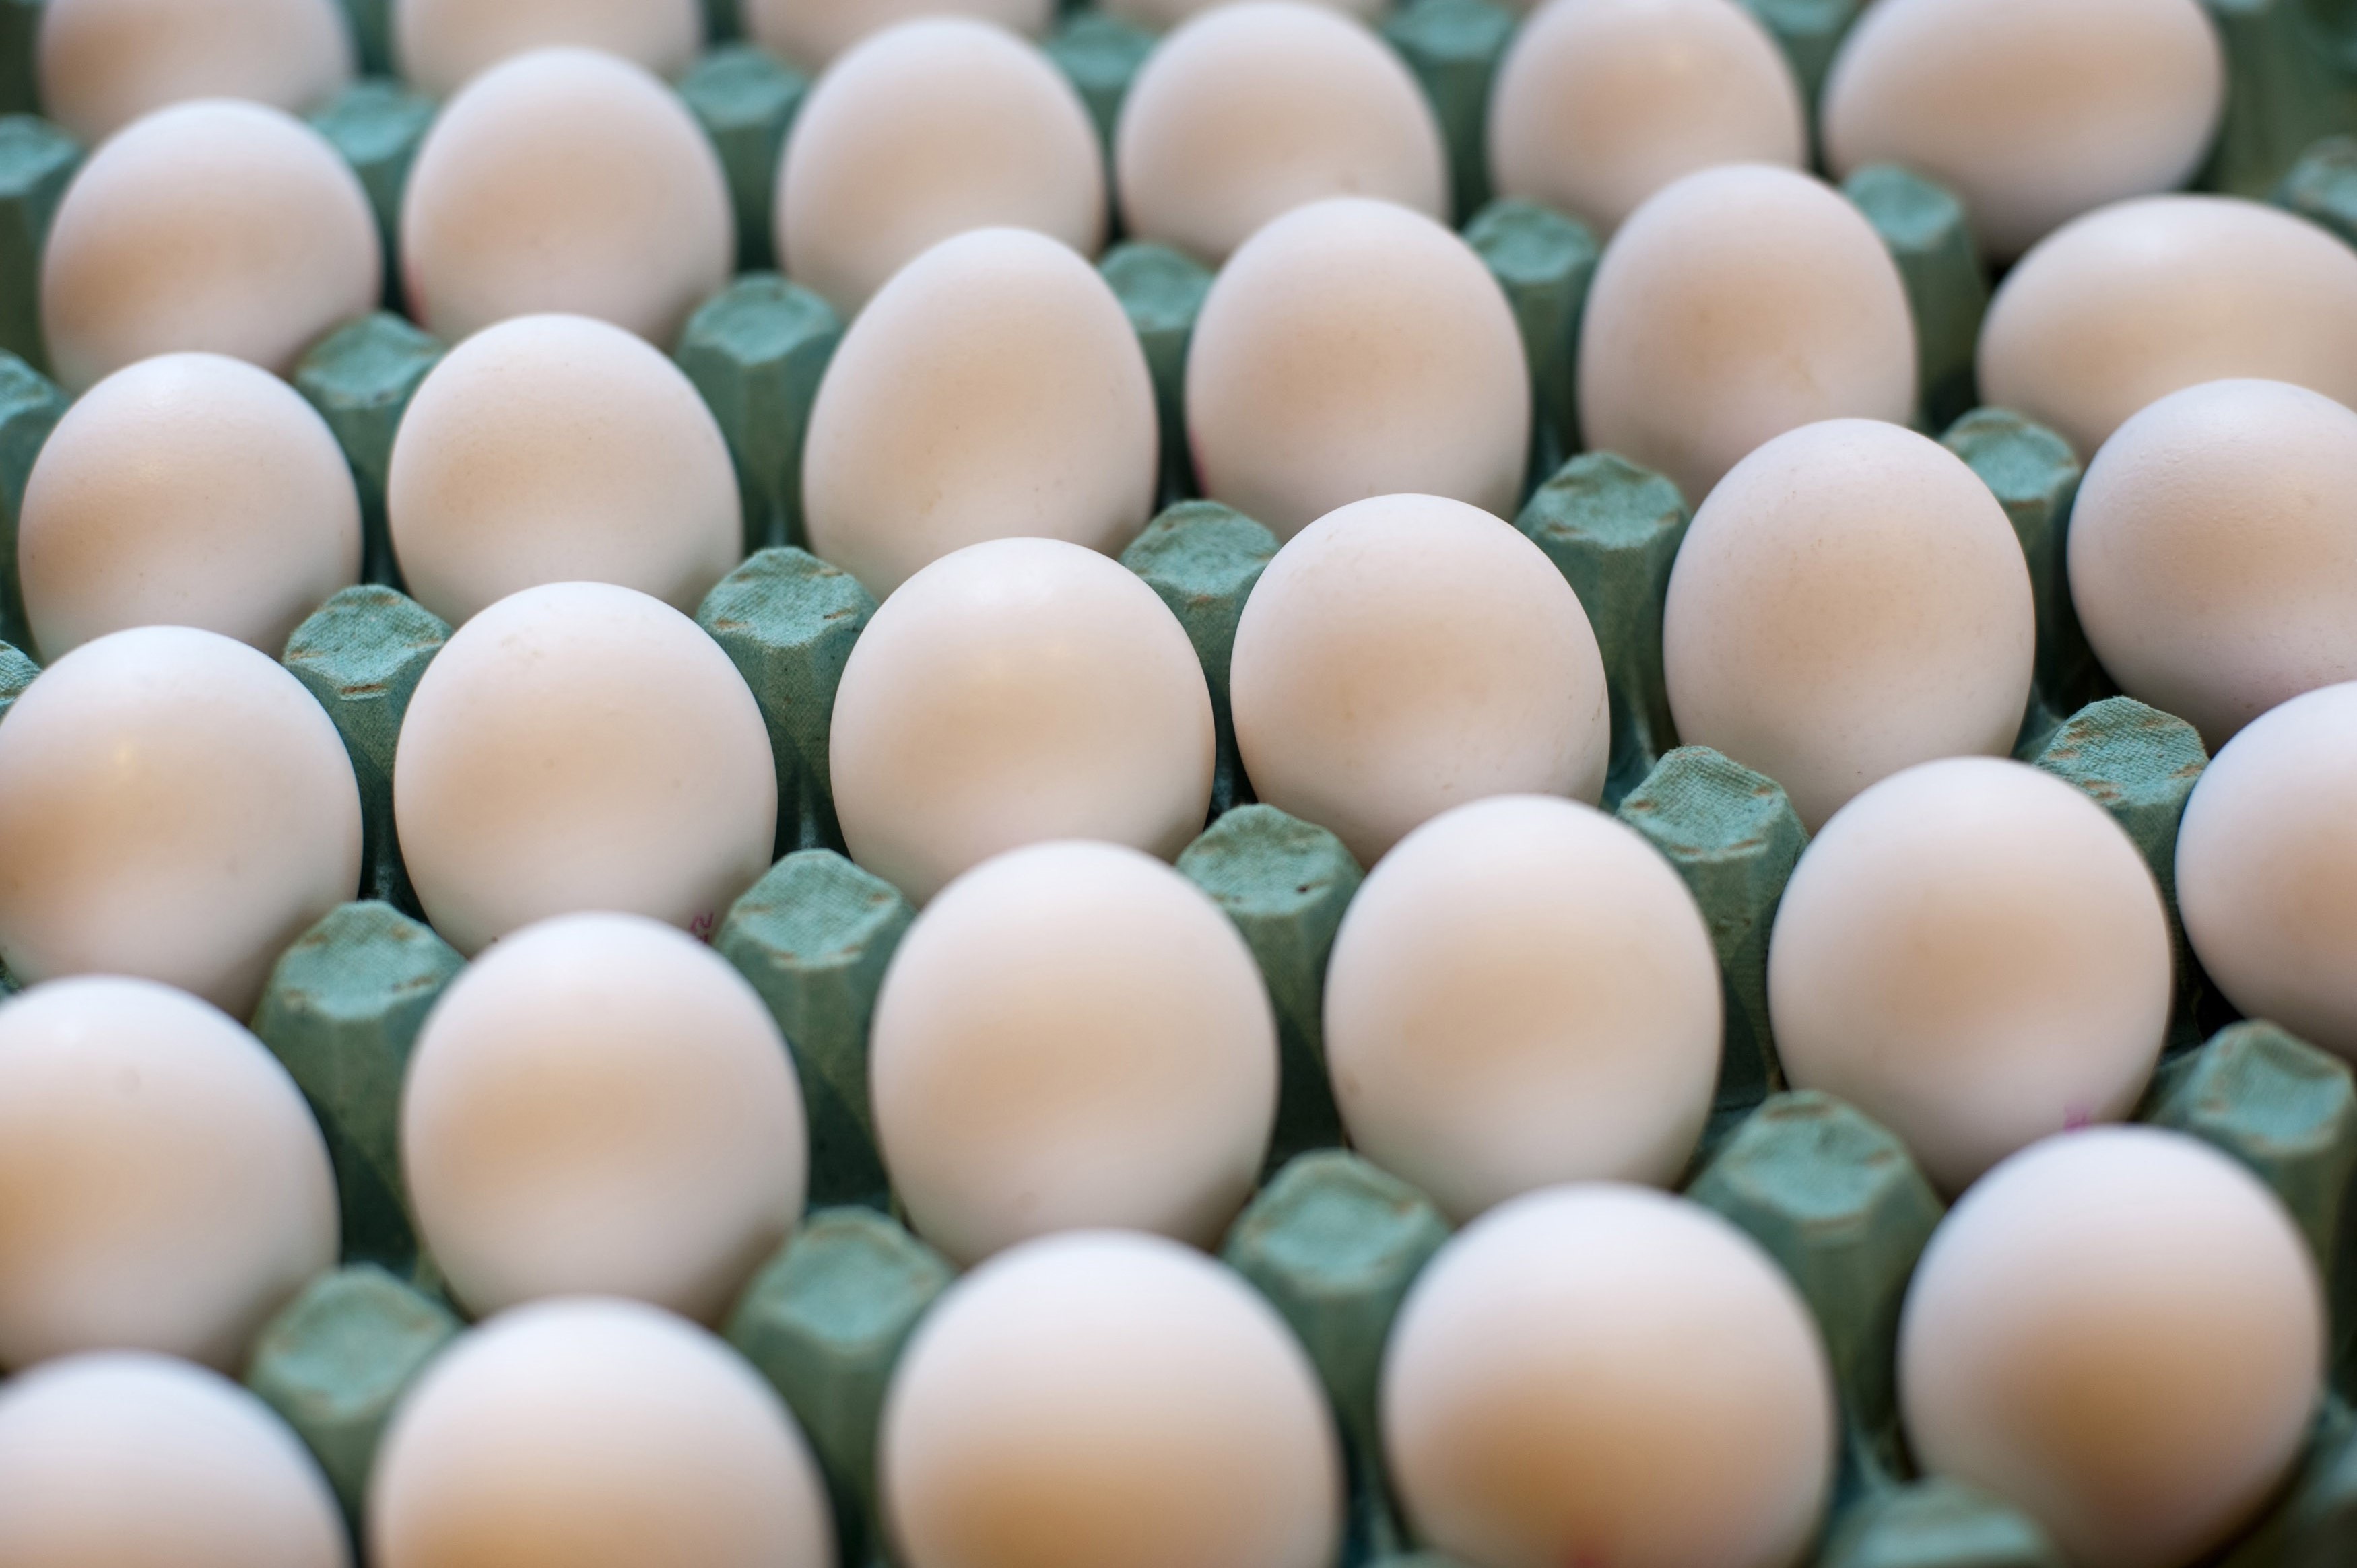 Carton of fresh farm eggs - Free Stock Image